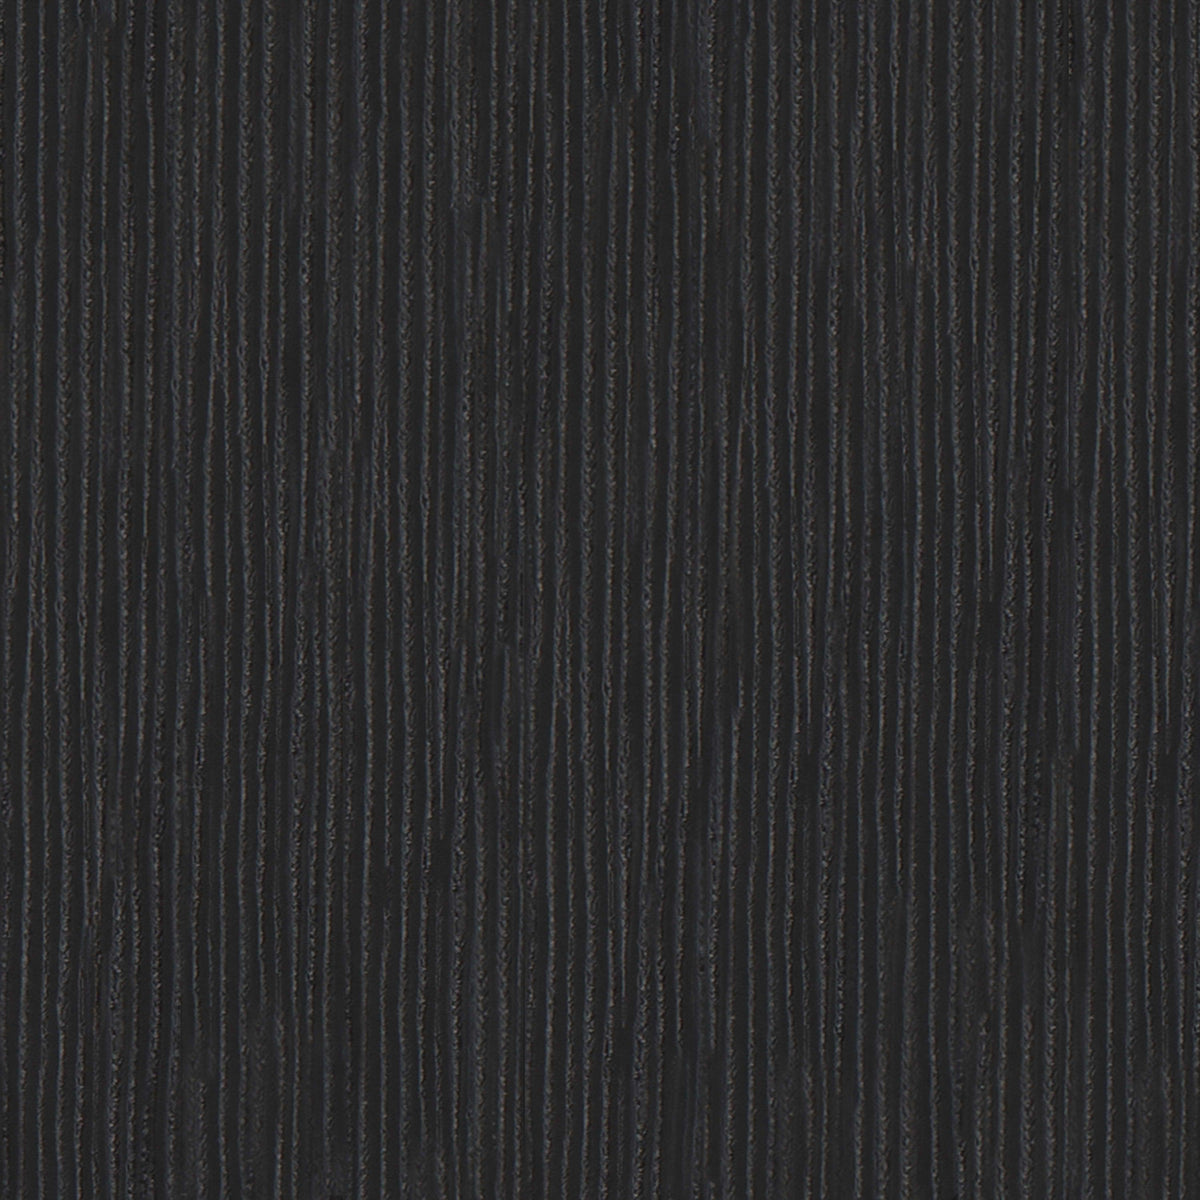 Black Woodgrain |#| Dry Erase Magnetic Weekly Calendar/Chalk Board - Black Woodgrain Frame - 24x18